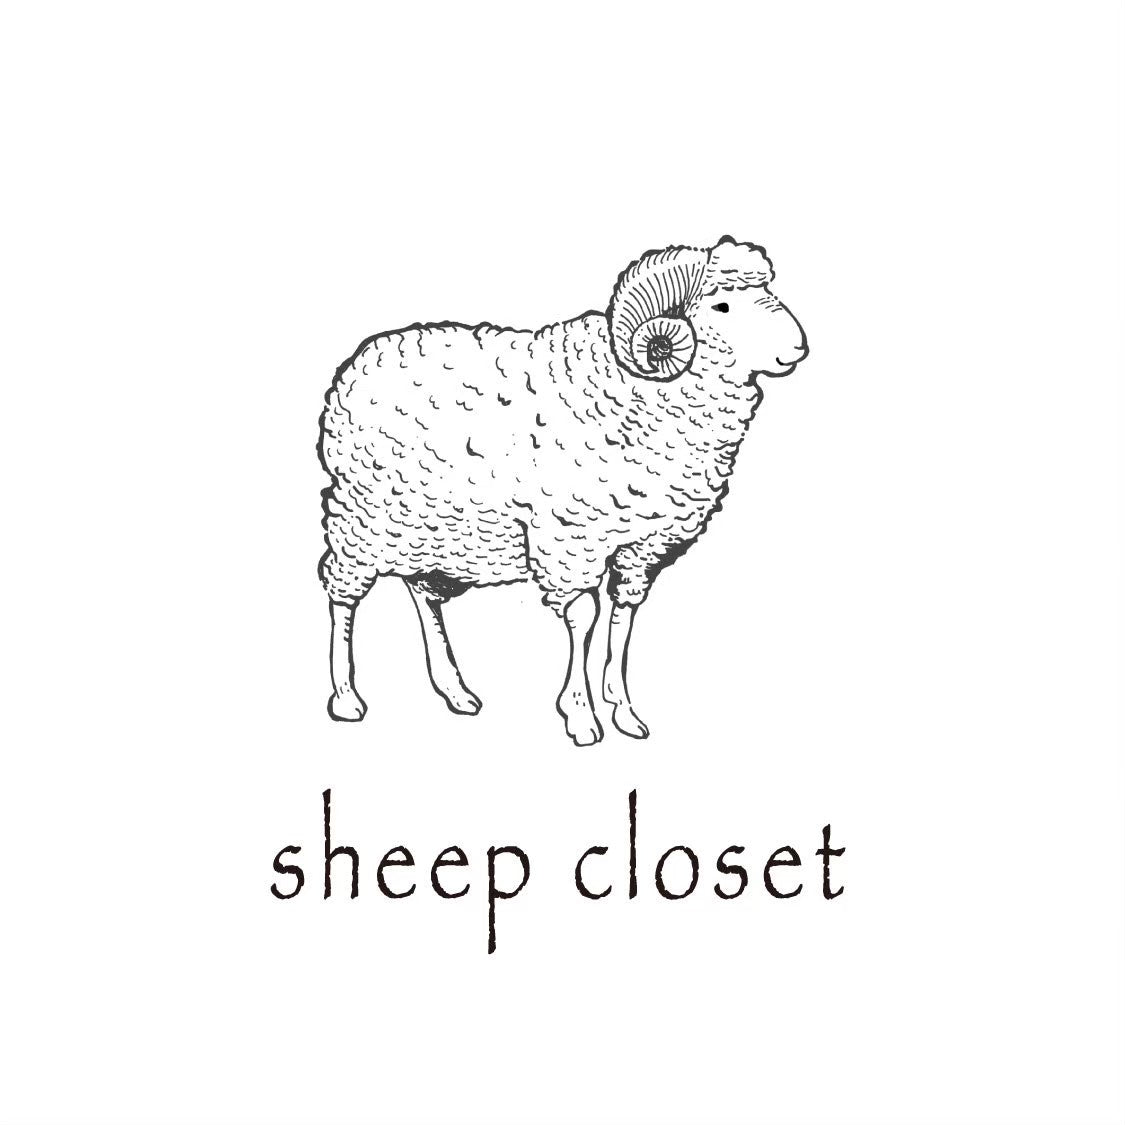 sheep closet